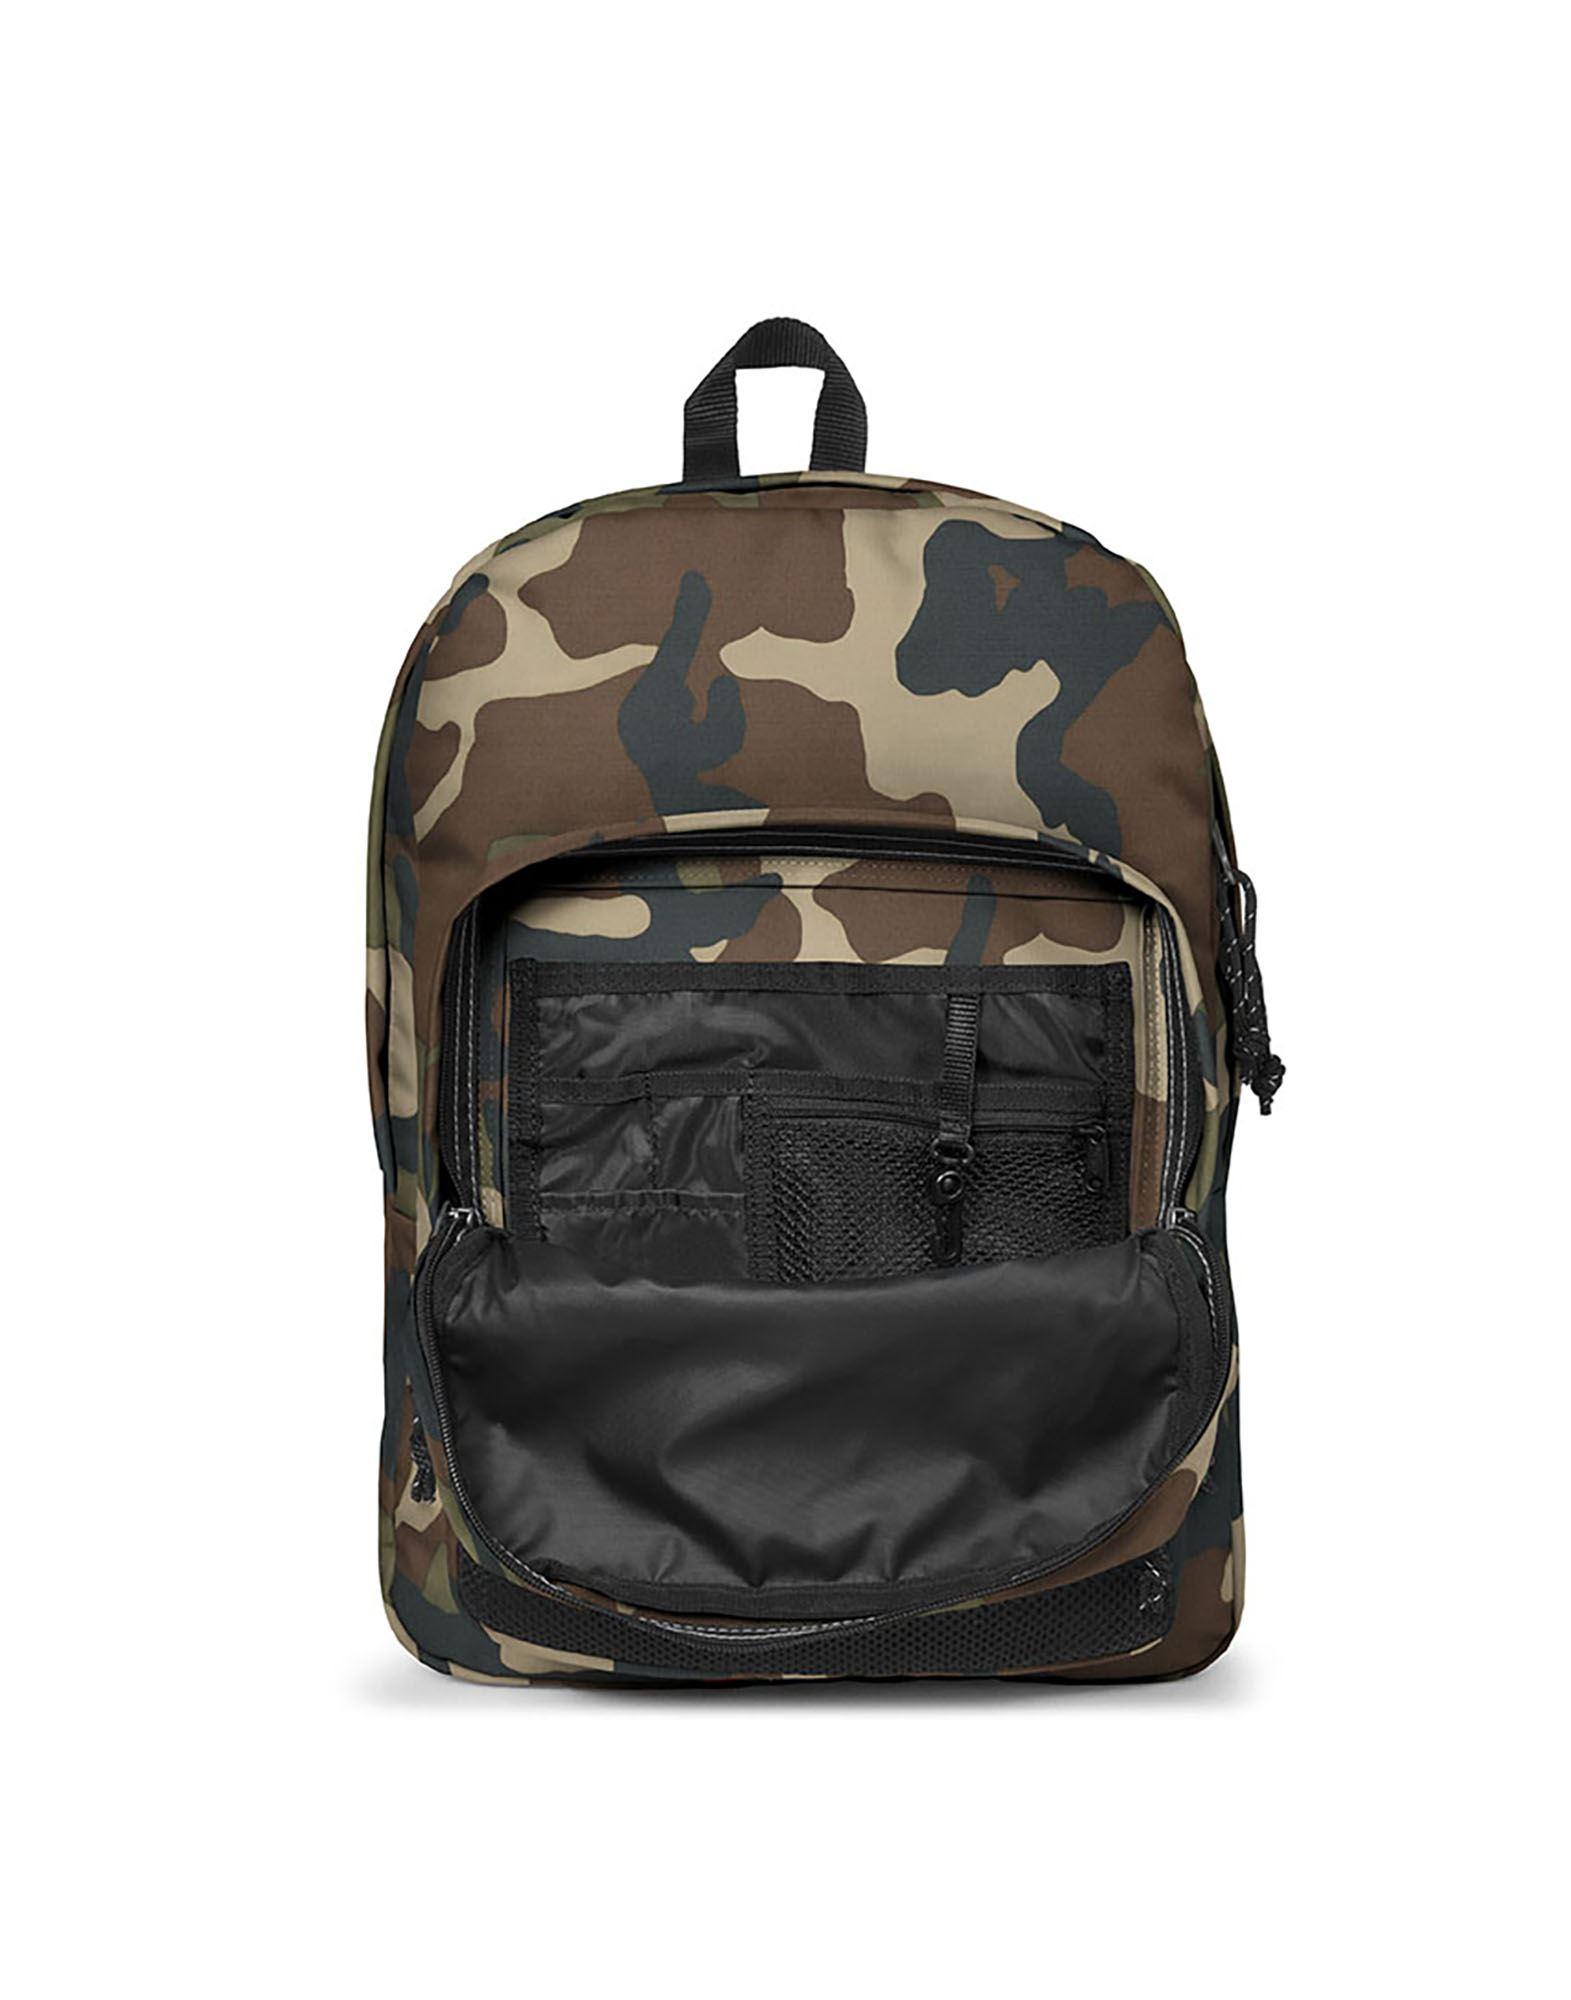 Eastpak Backpack in Black | Lyst